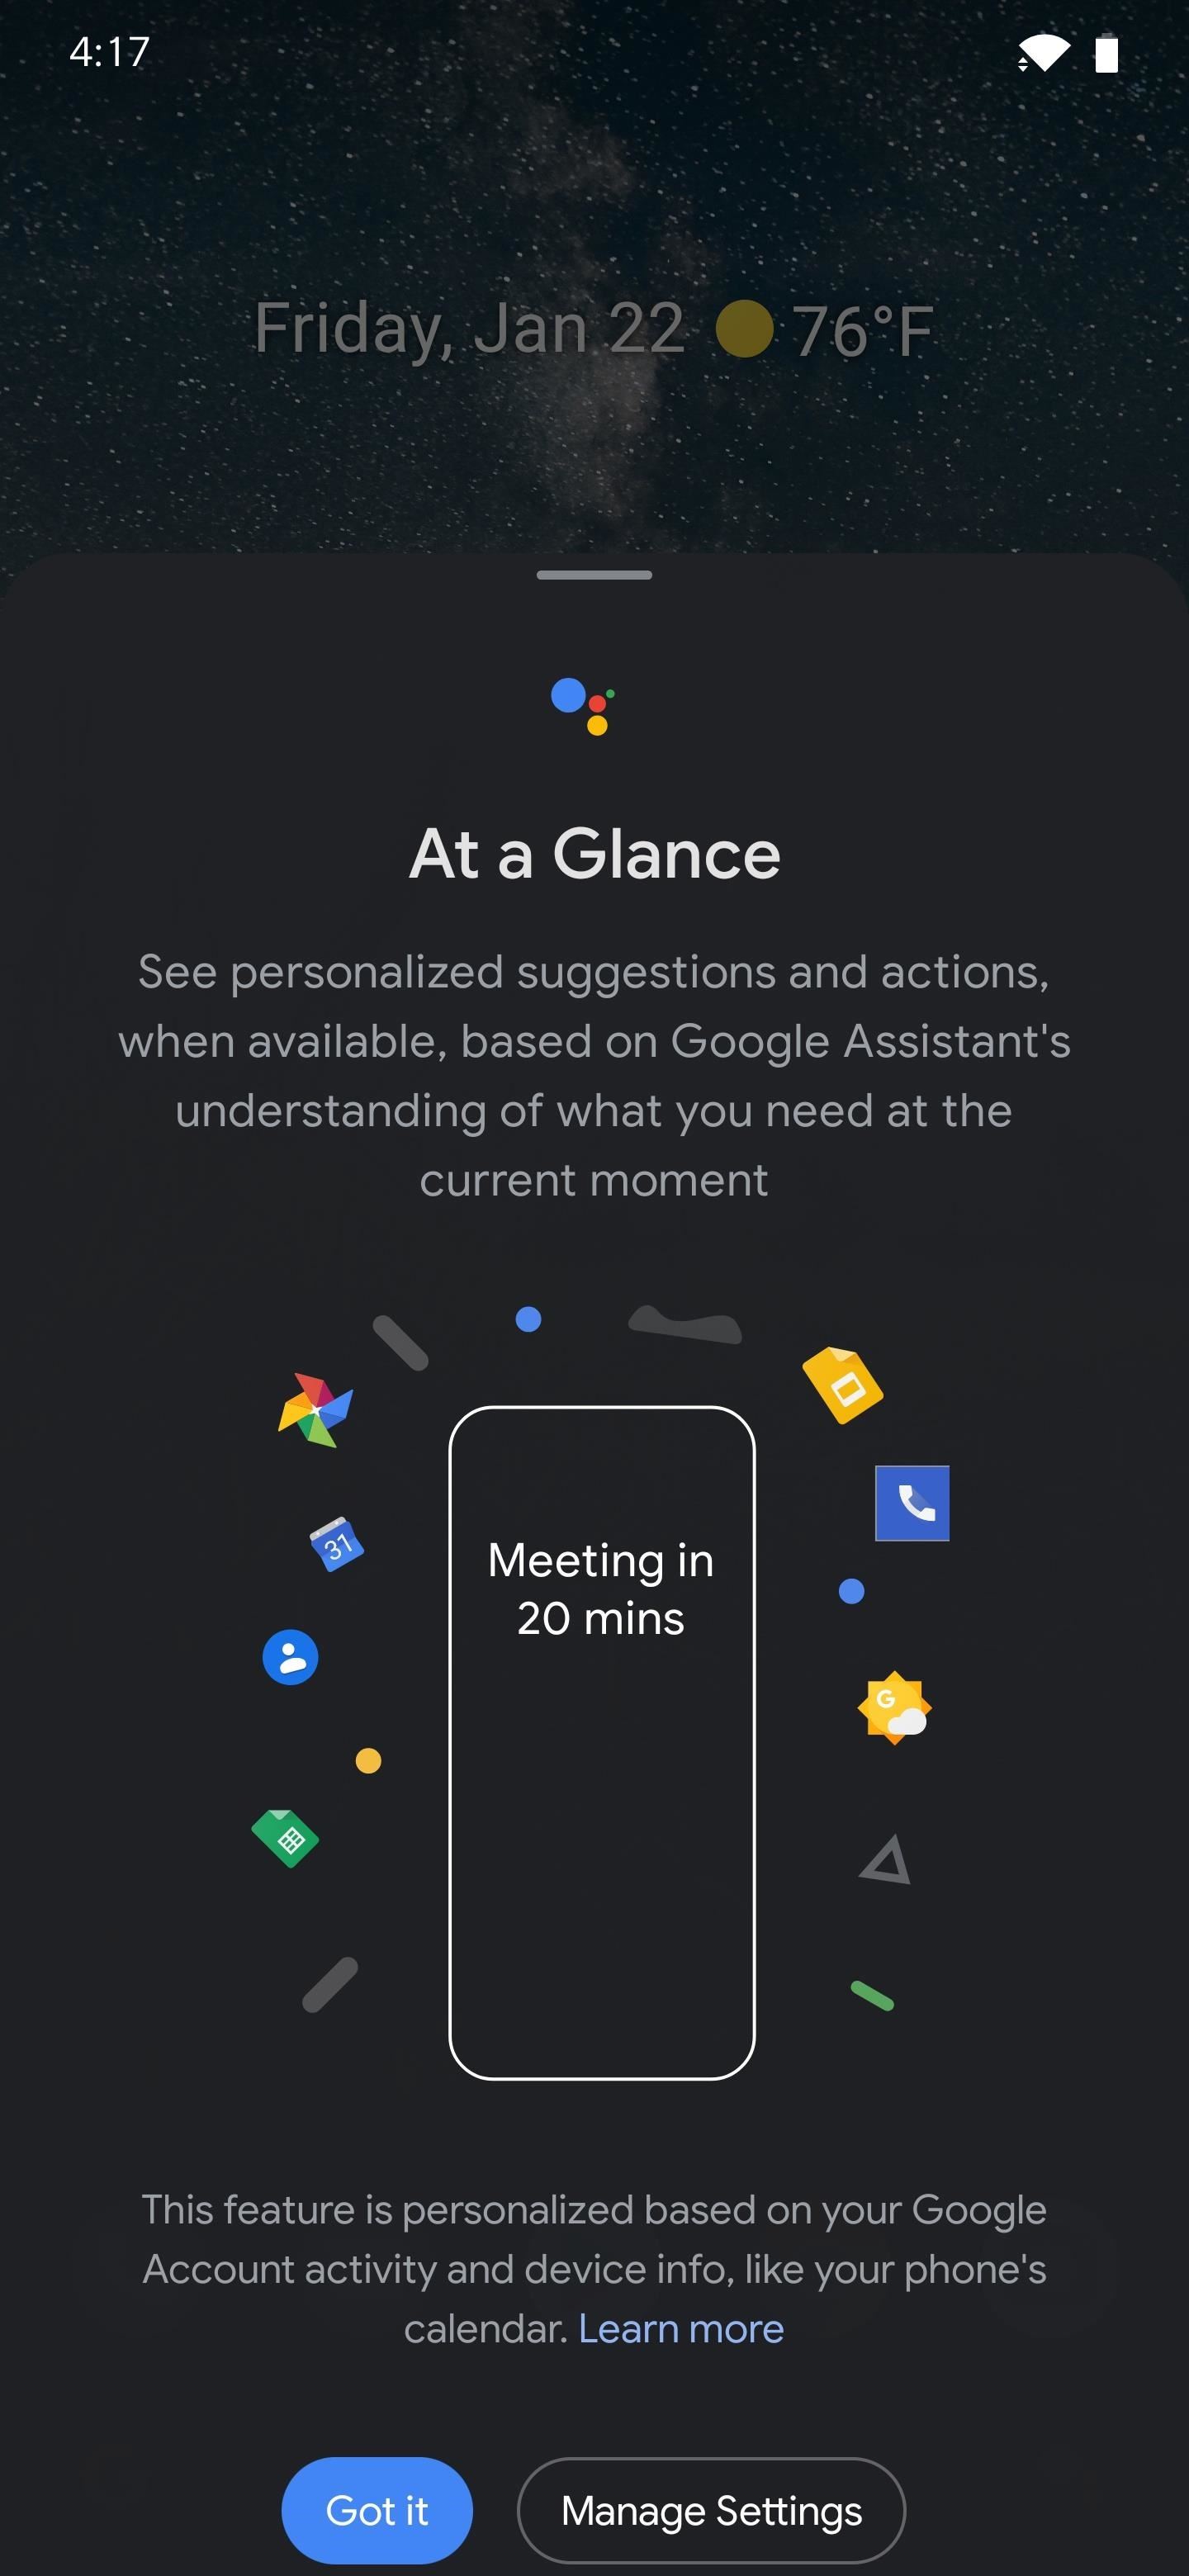 How to Make Nova Launcher Look & Behave Like Google's Pixel Launcher